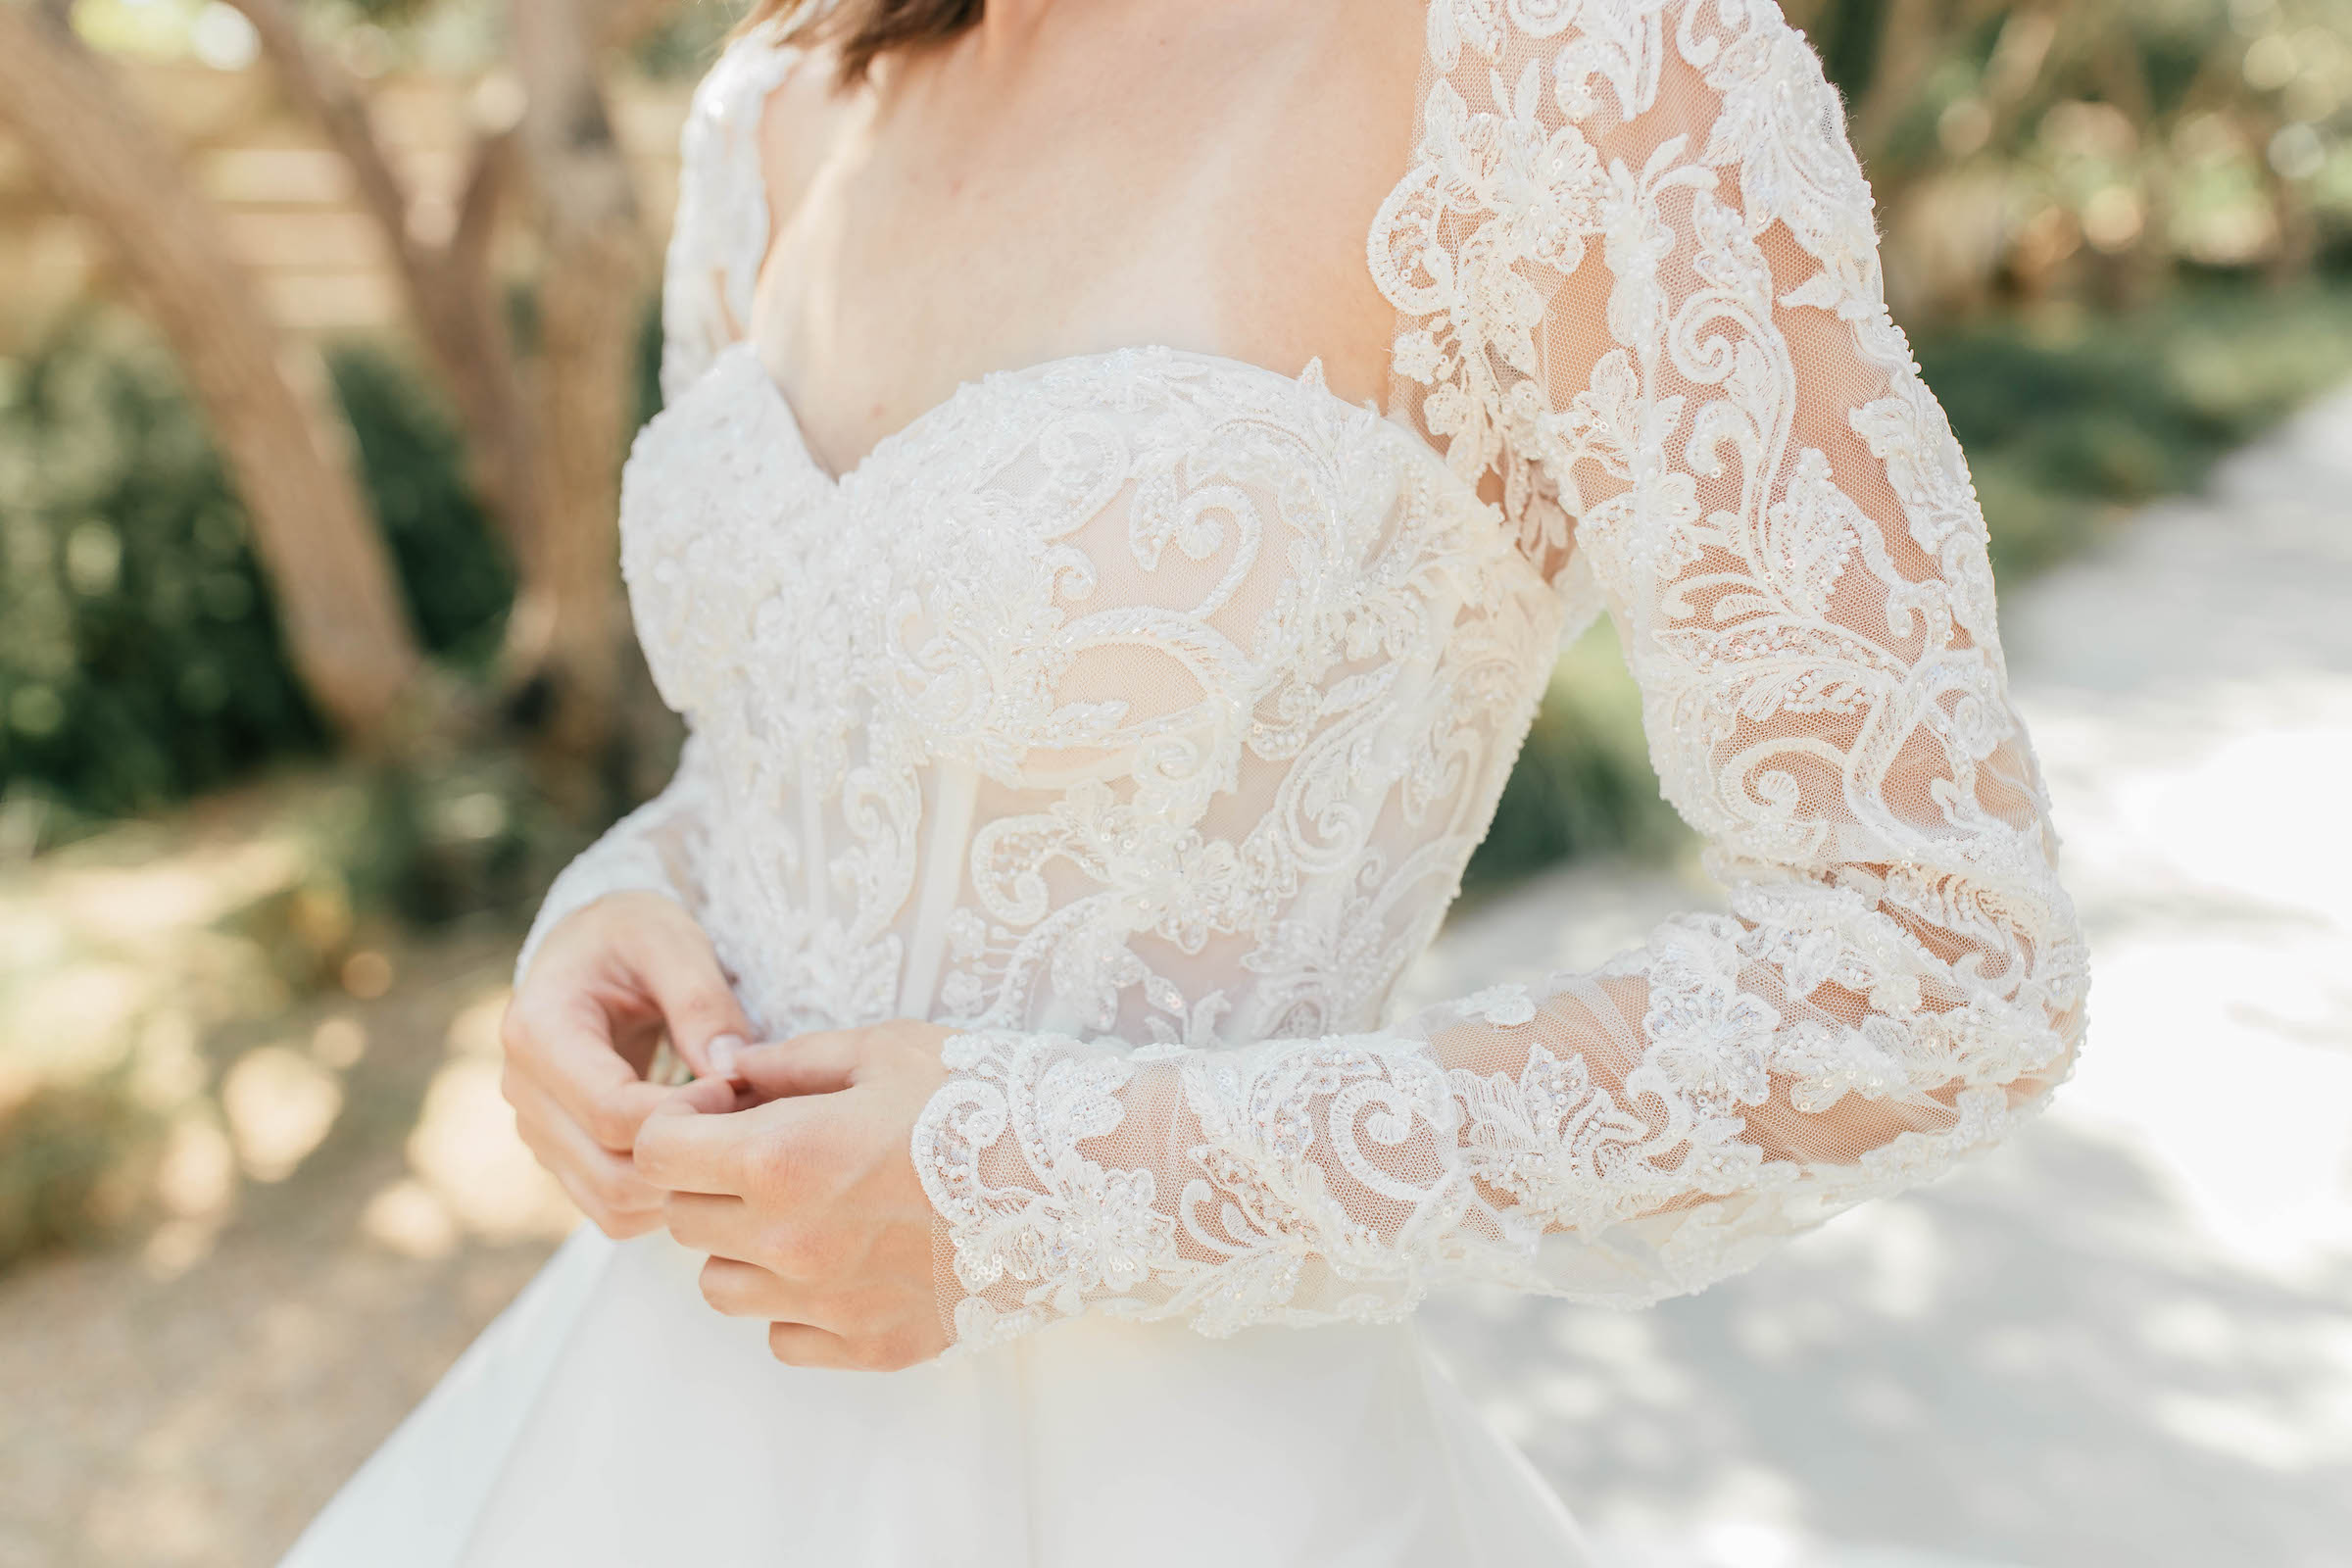 Lace Bridal Look by Martina Liana - Style: 1441